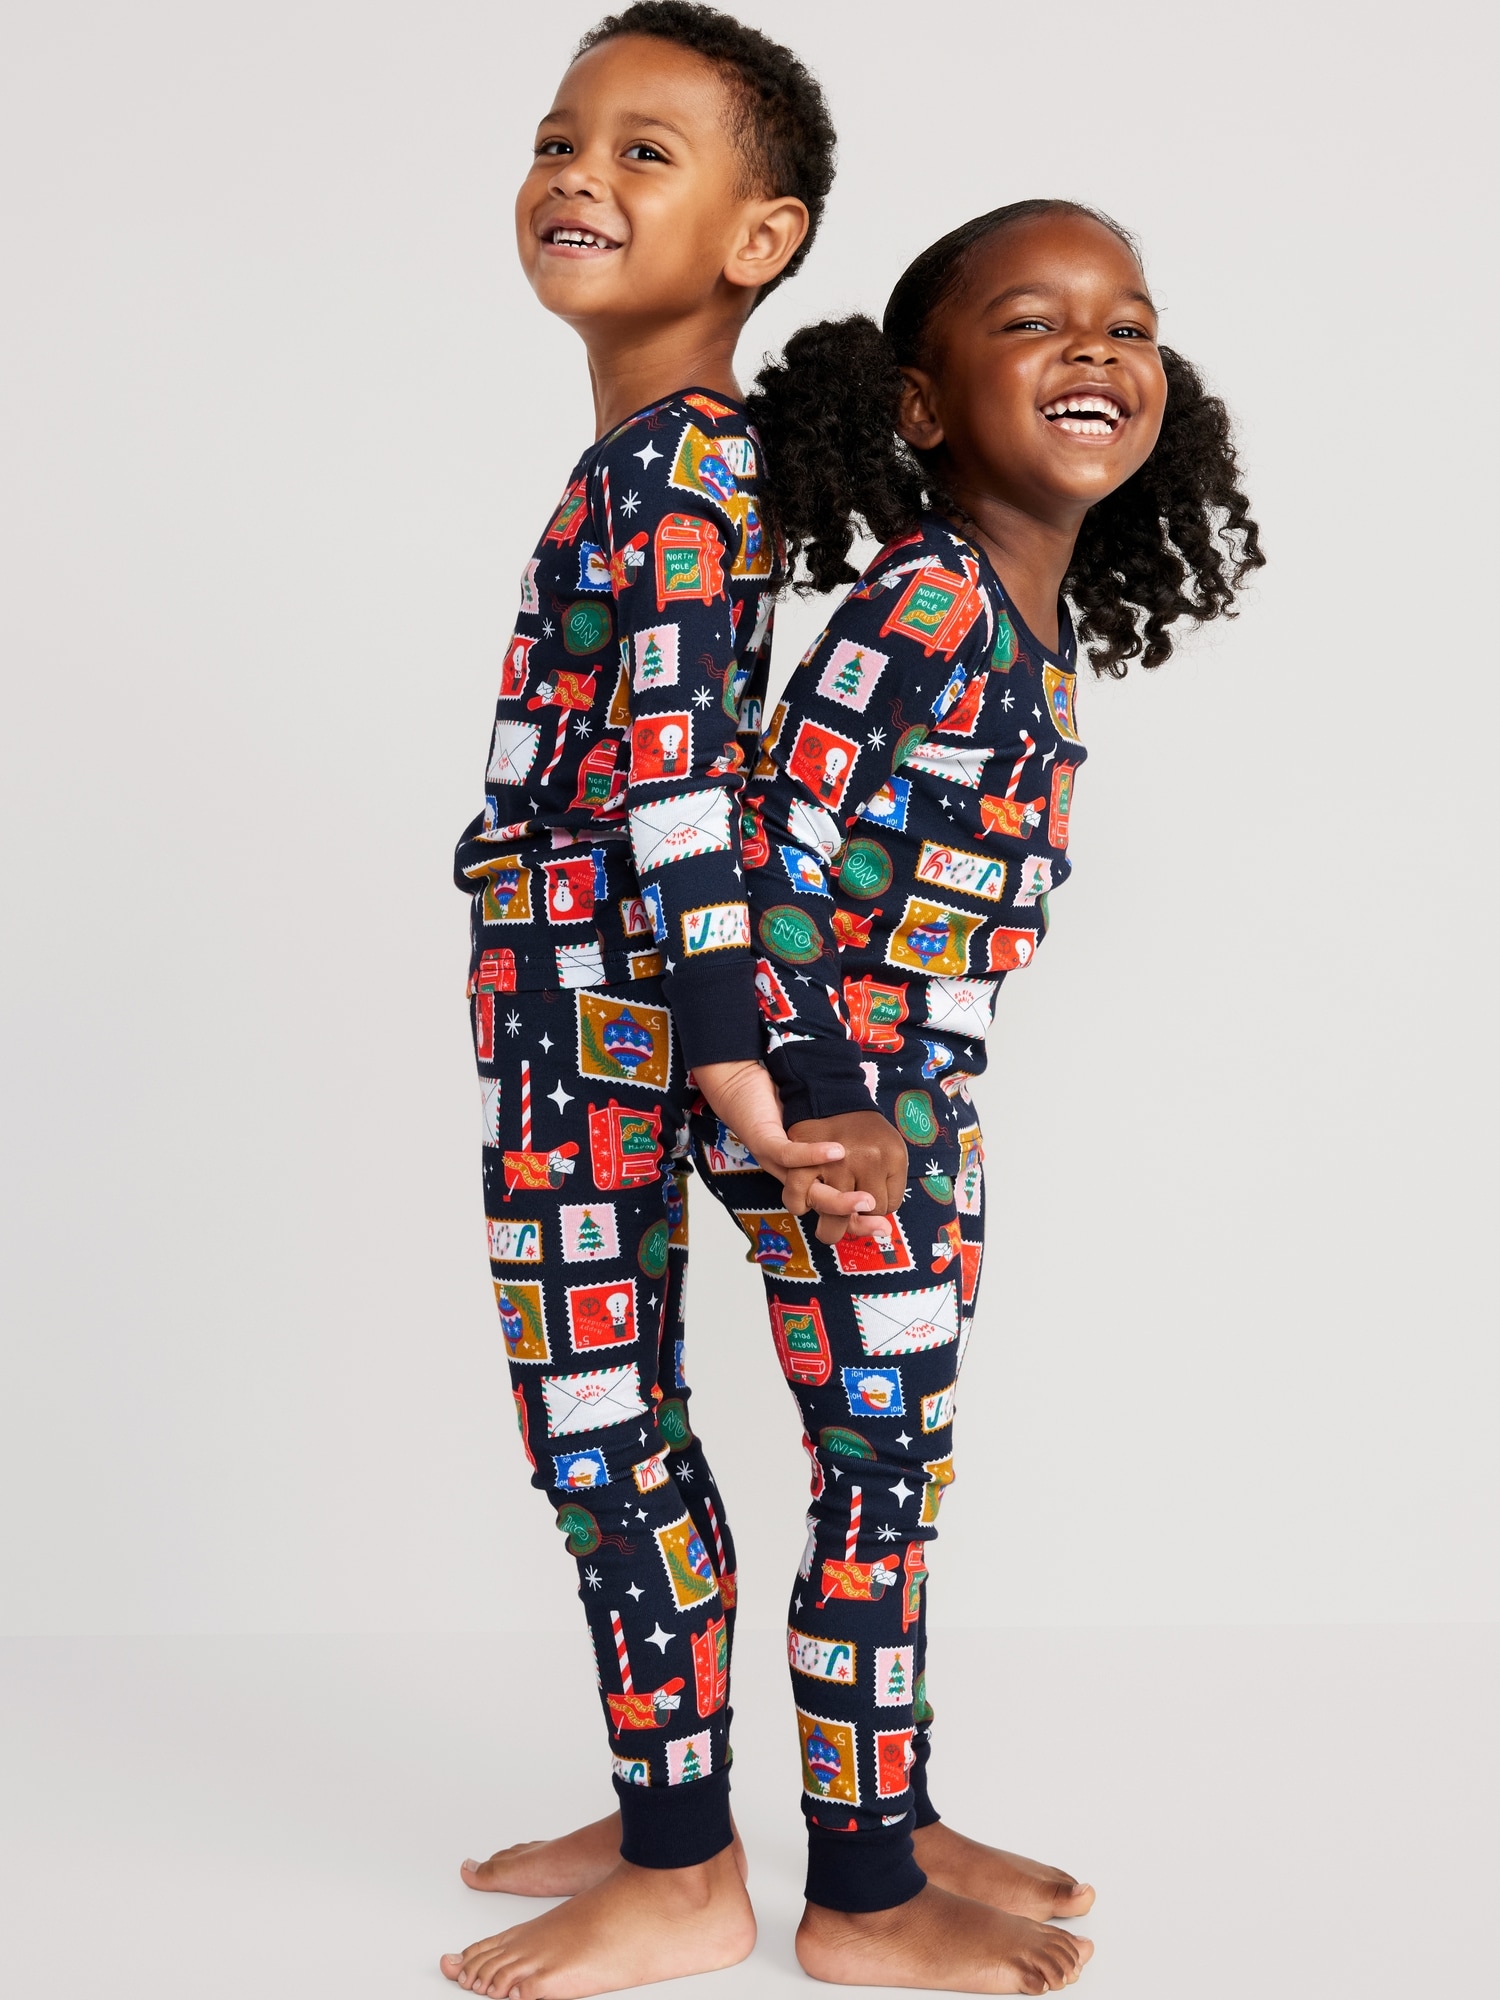 Unisex Printed Snug-Fit Pajama Set for Toddler & Baby